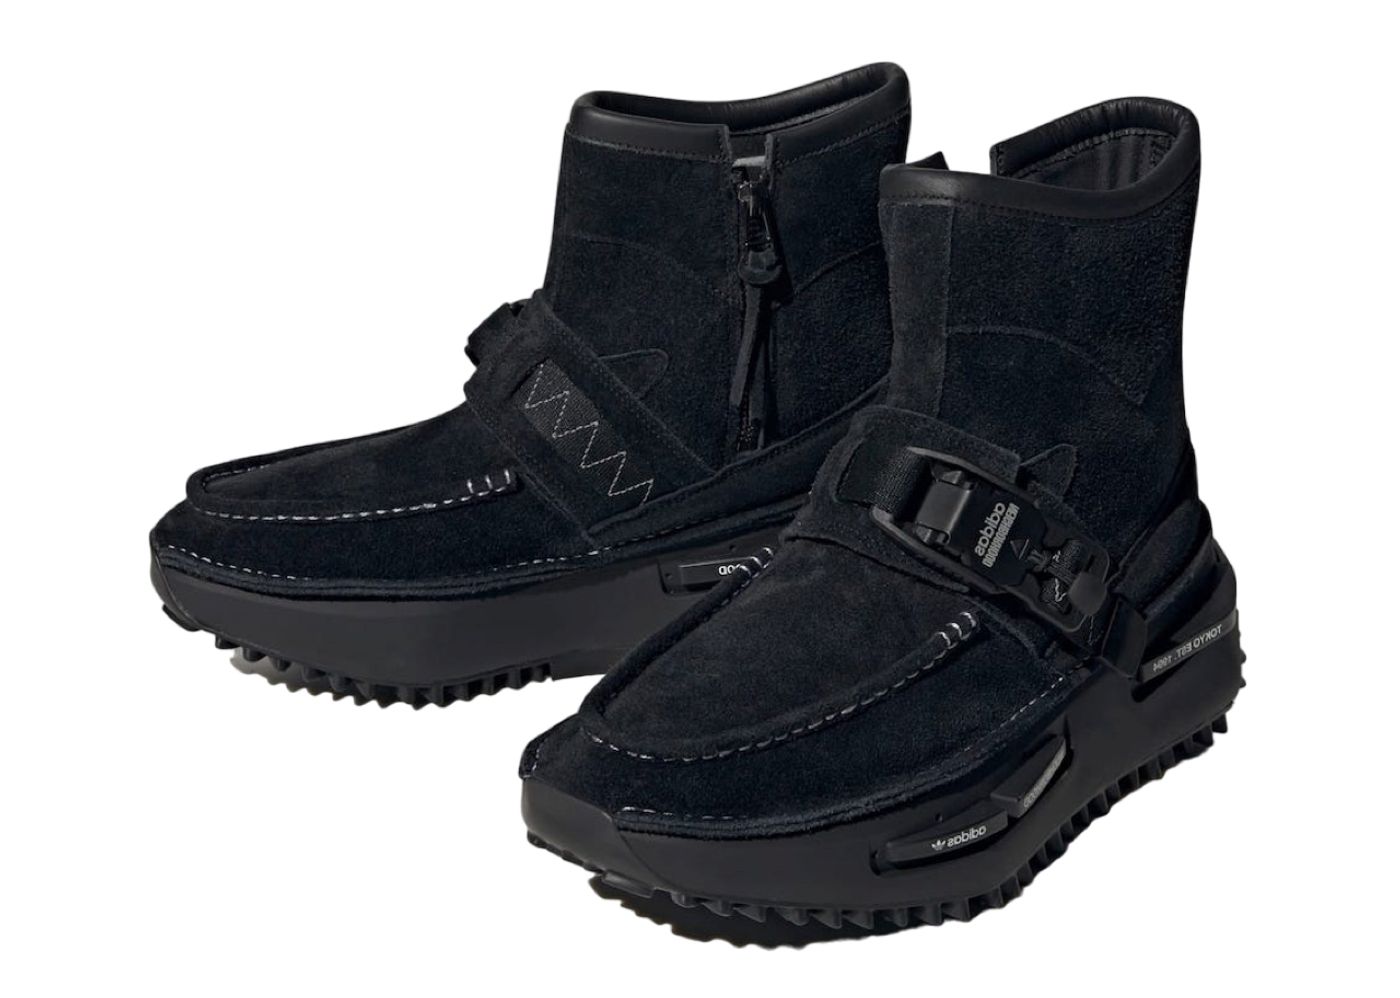 adidas Originals NEIGHBORHOOD x NMD_S1 Boots Core Black ID1708